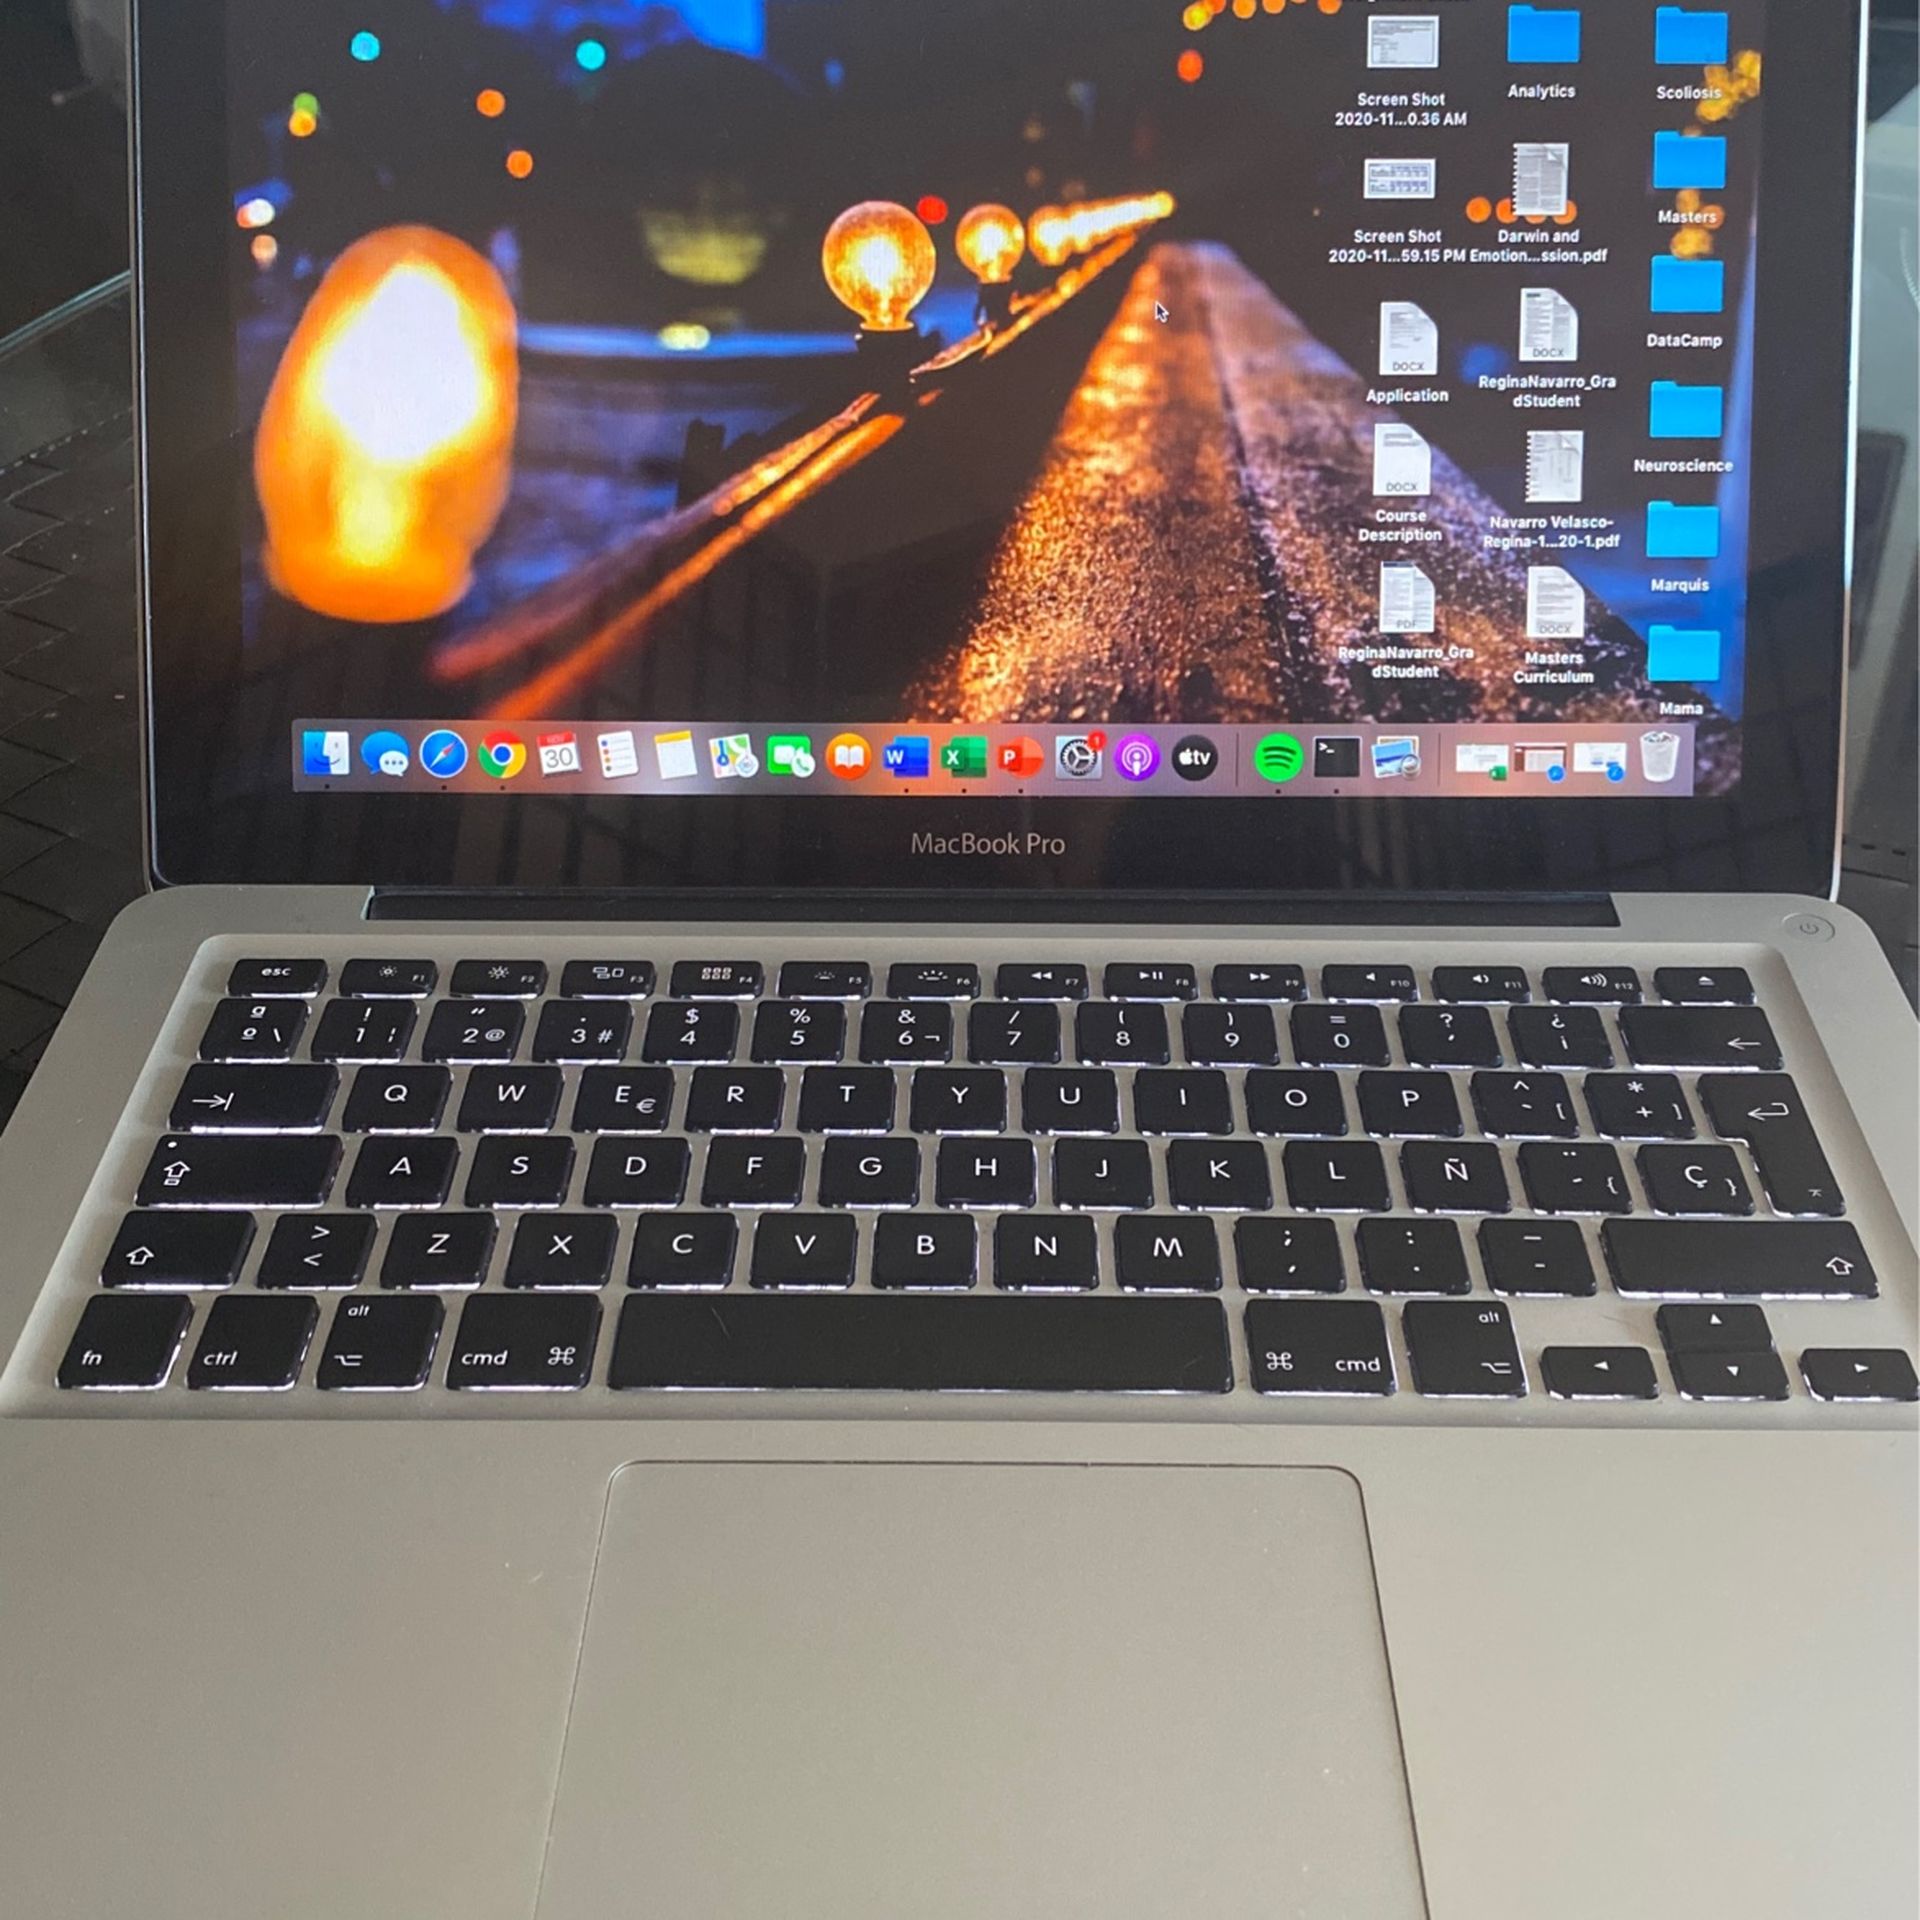 MacBook Pro 13” Mid 2012 10GB Memory, 500GB Storage